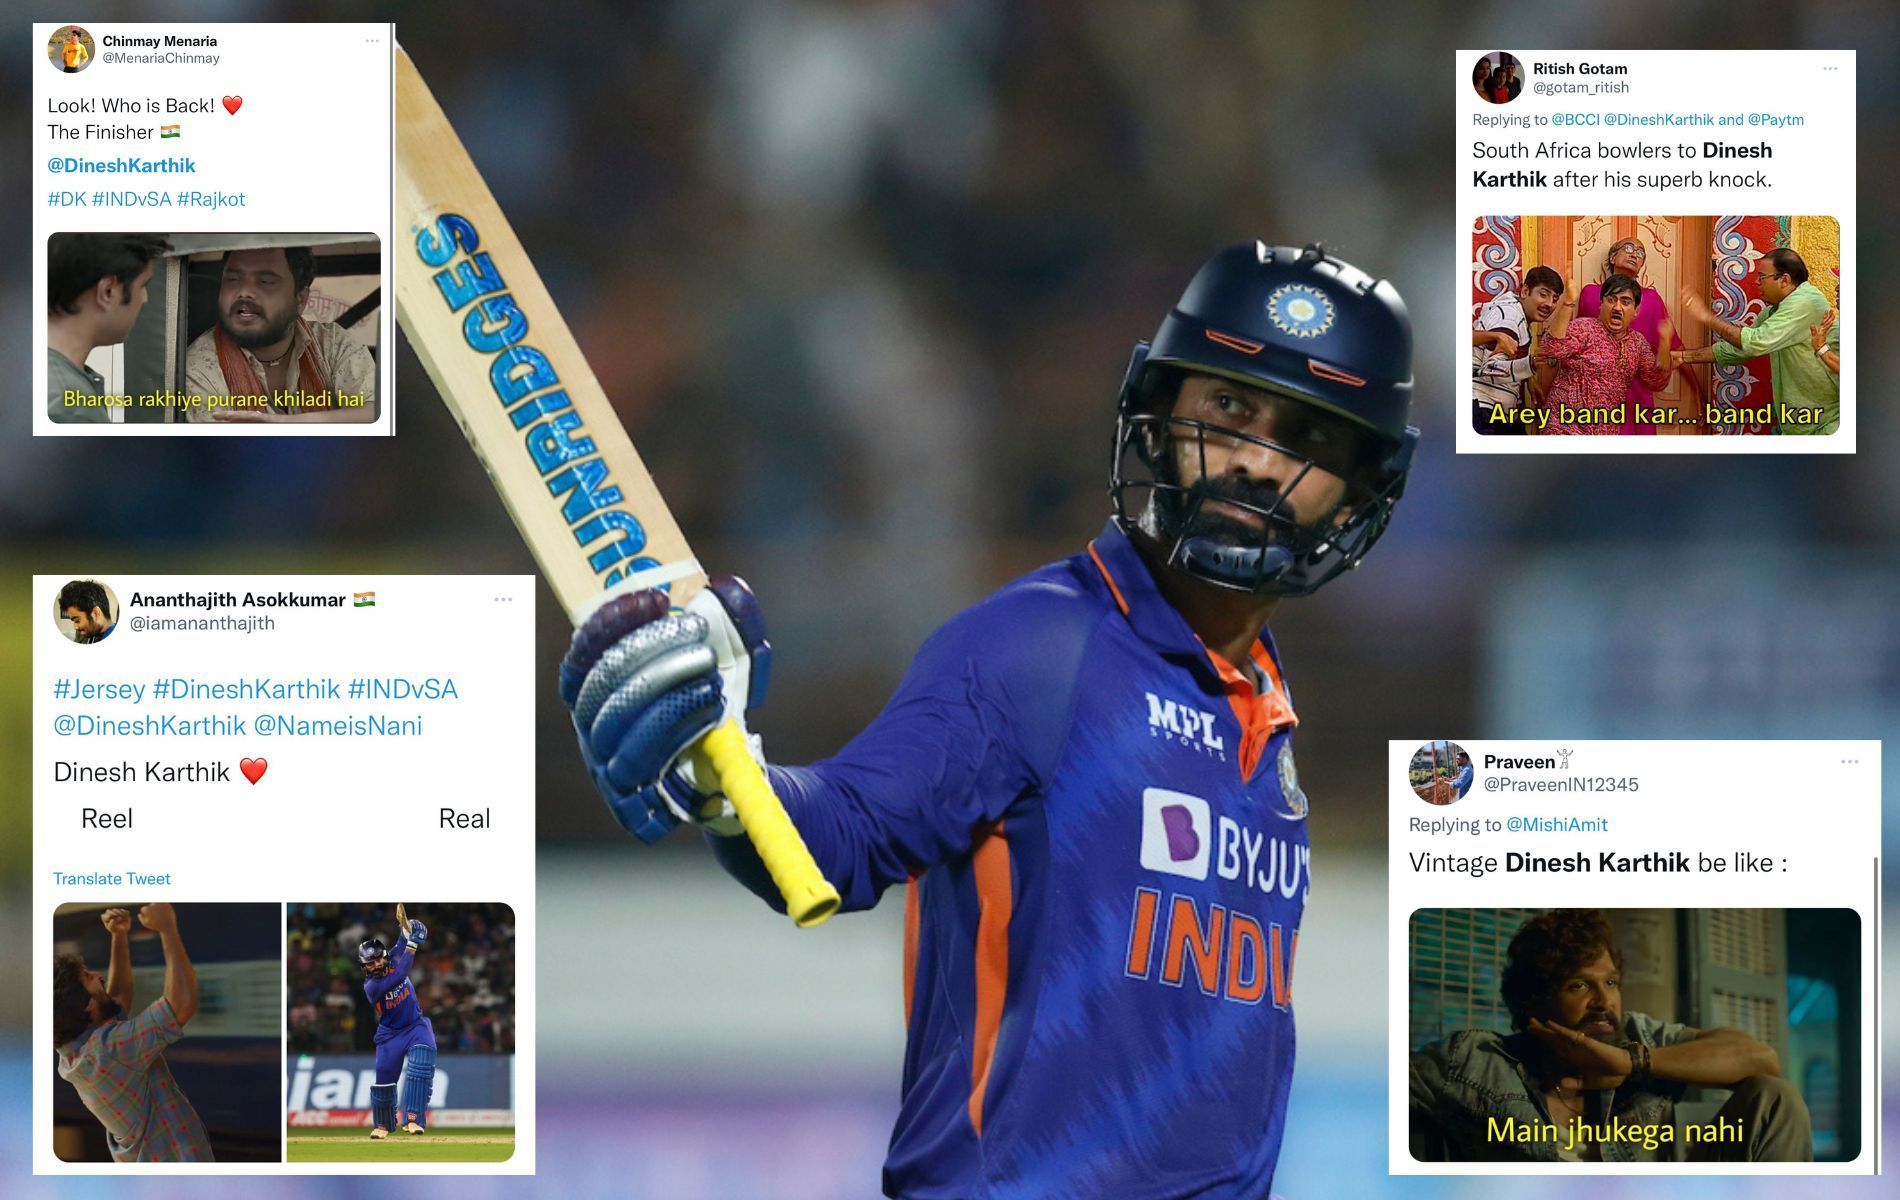 Dinesh Karthik scored 55 runs off 27 balls in fourth T20I against SA (Pic: Twitter)